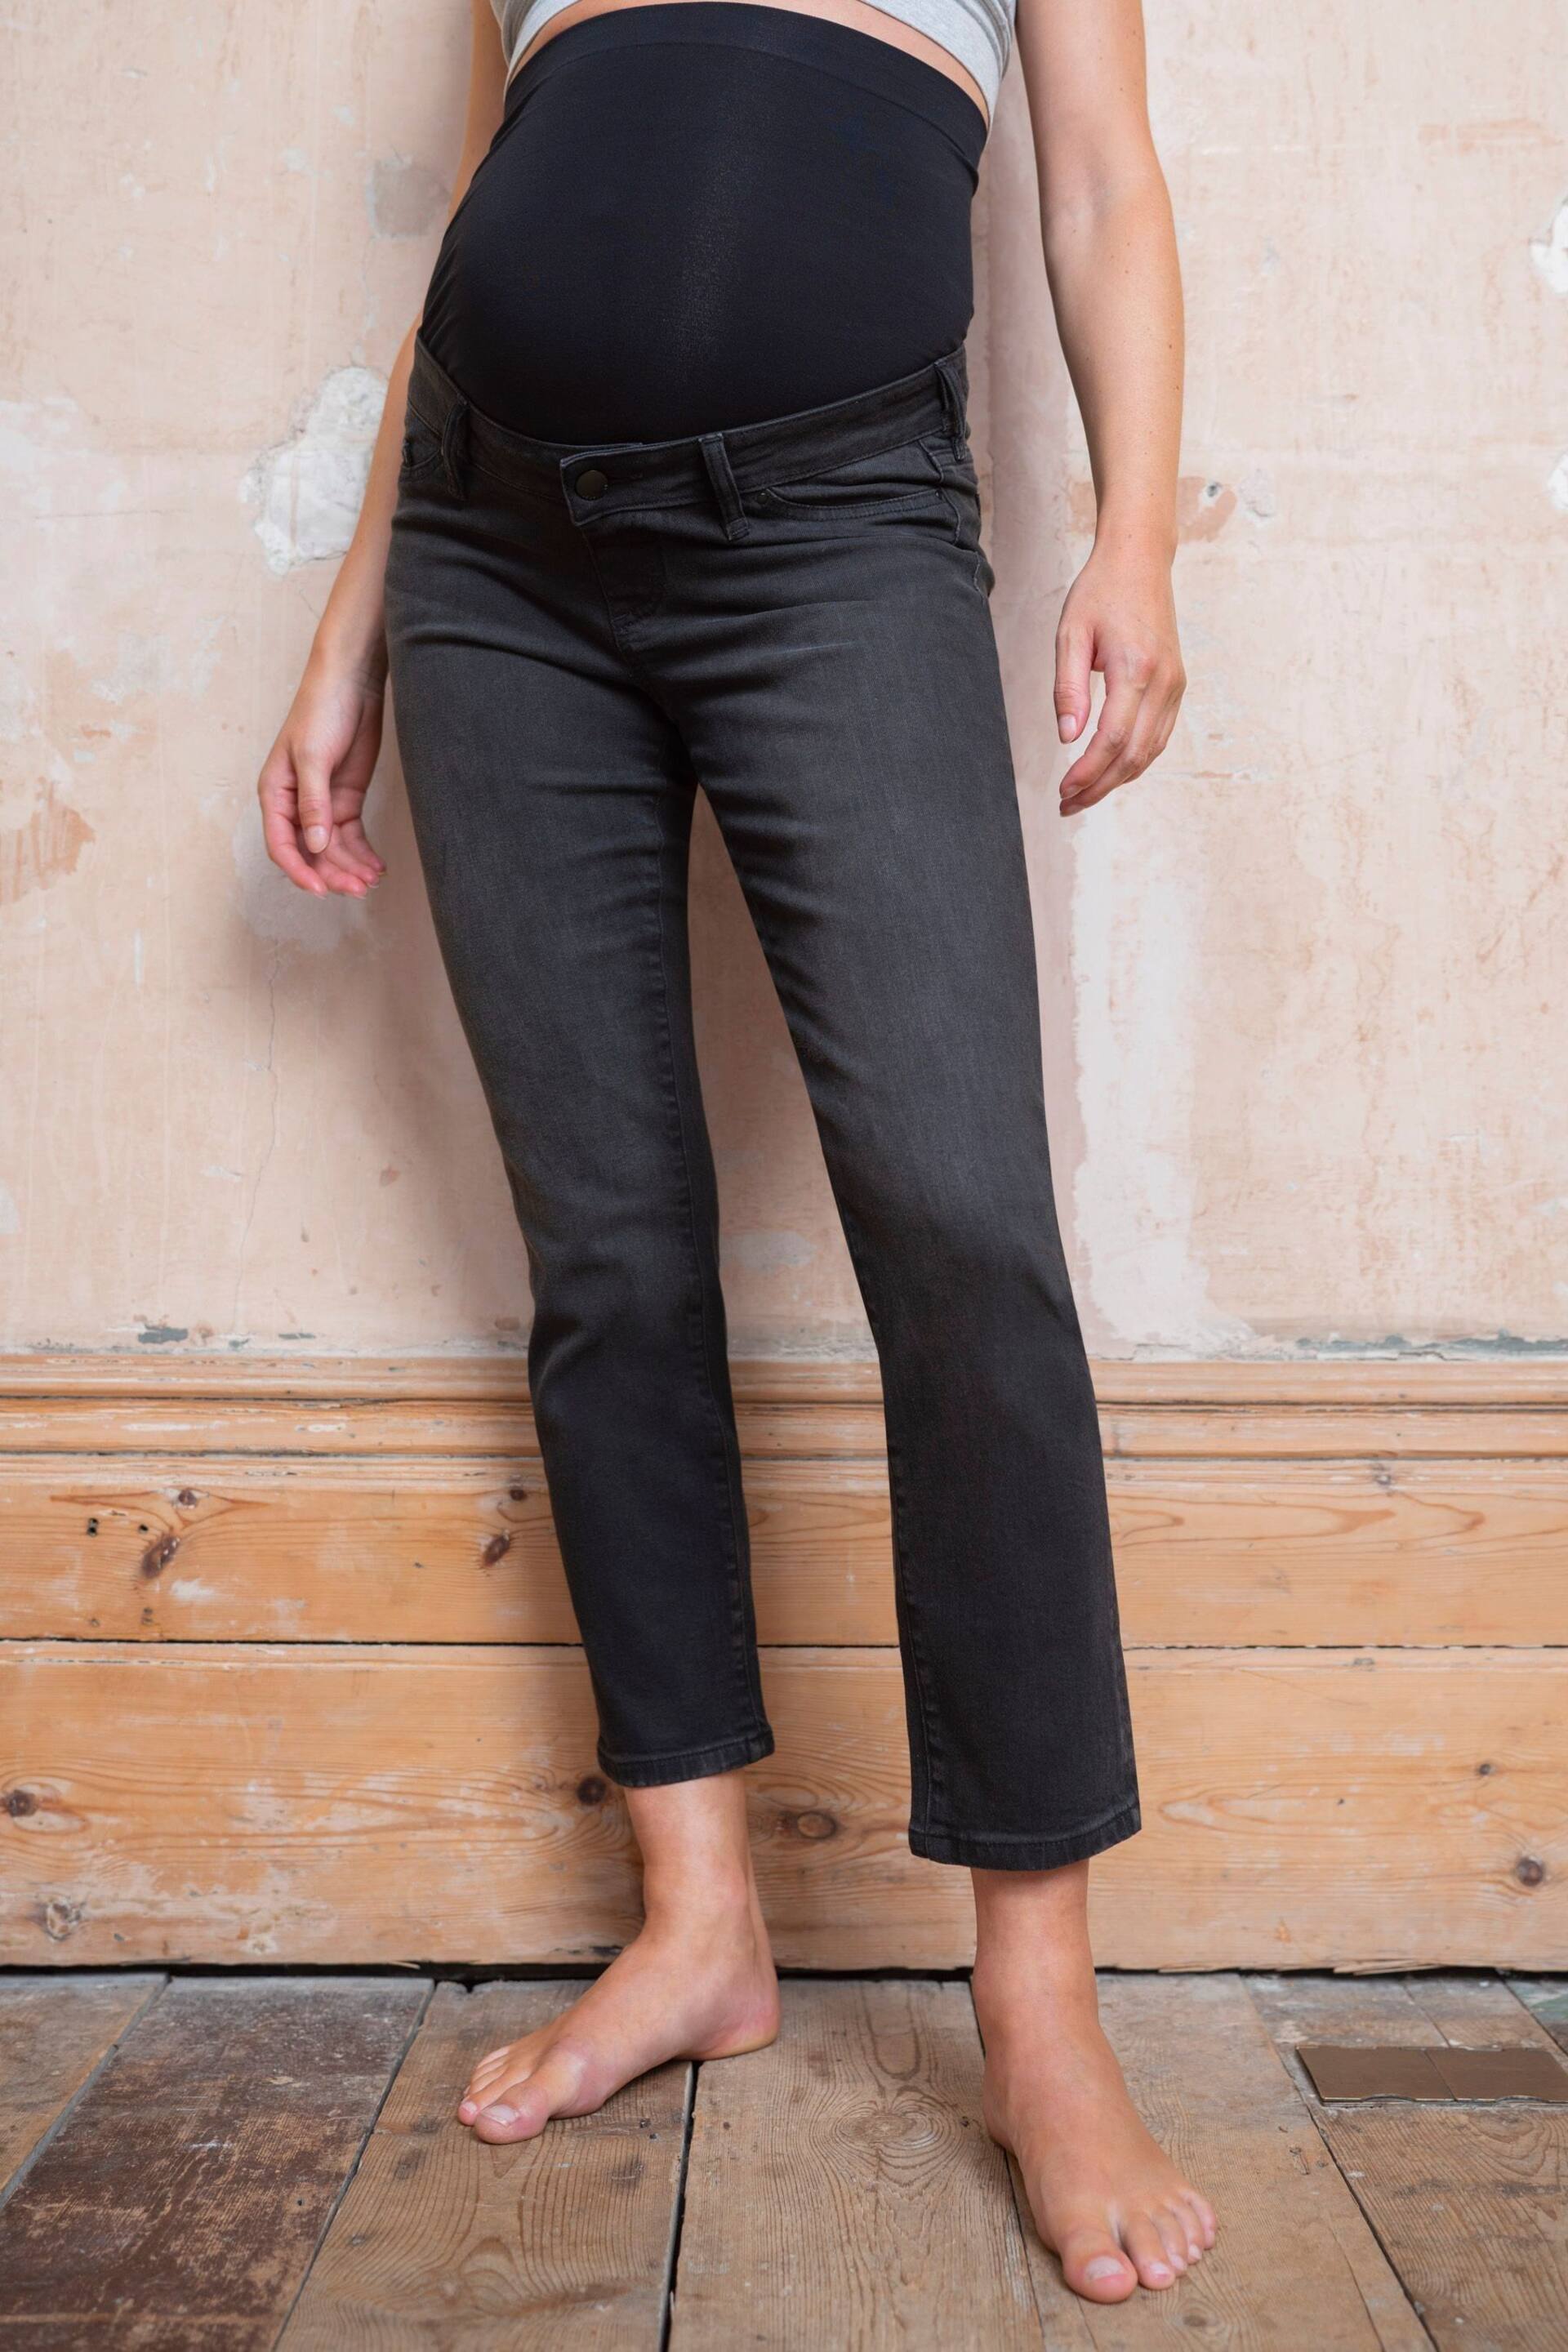 Seraphine Luca-slim Leg Black Jeans - Image 5 of 8